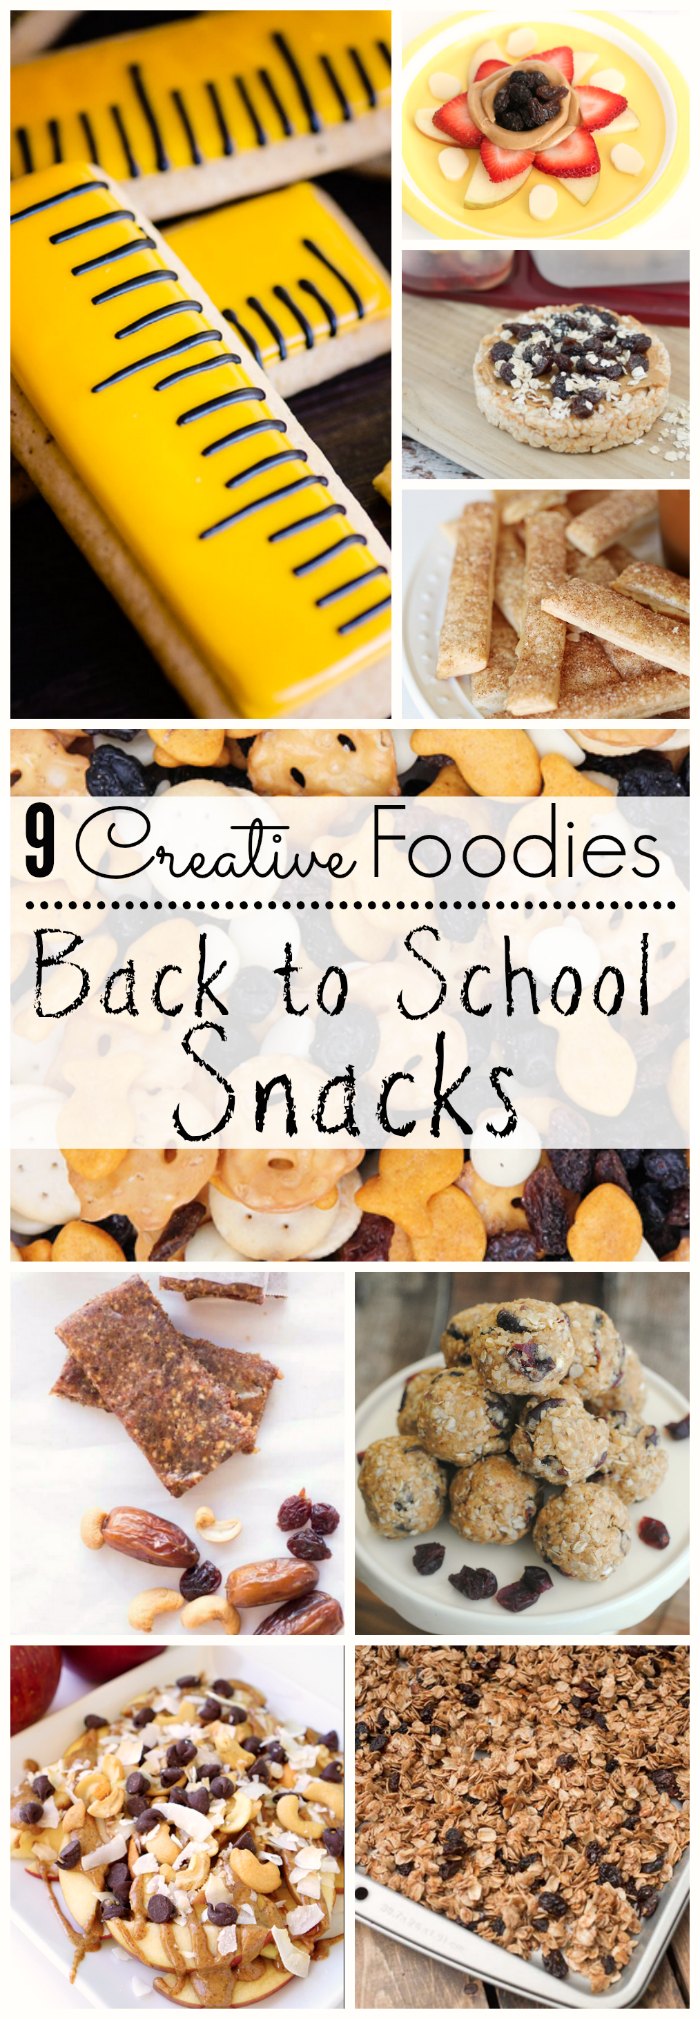 Back to School Snacks #CreativeFoodies